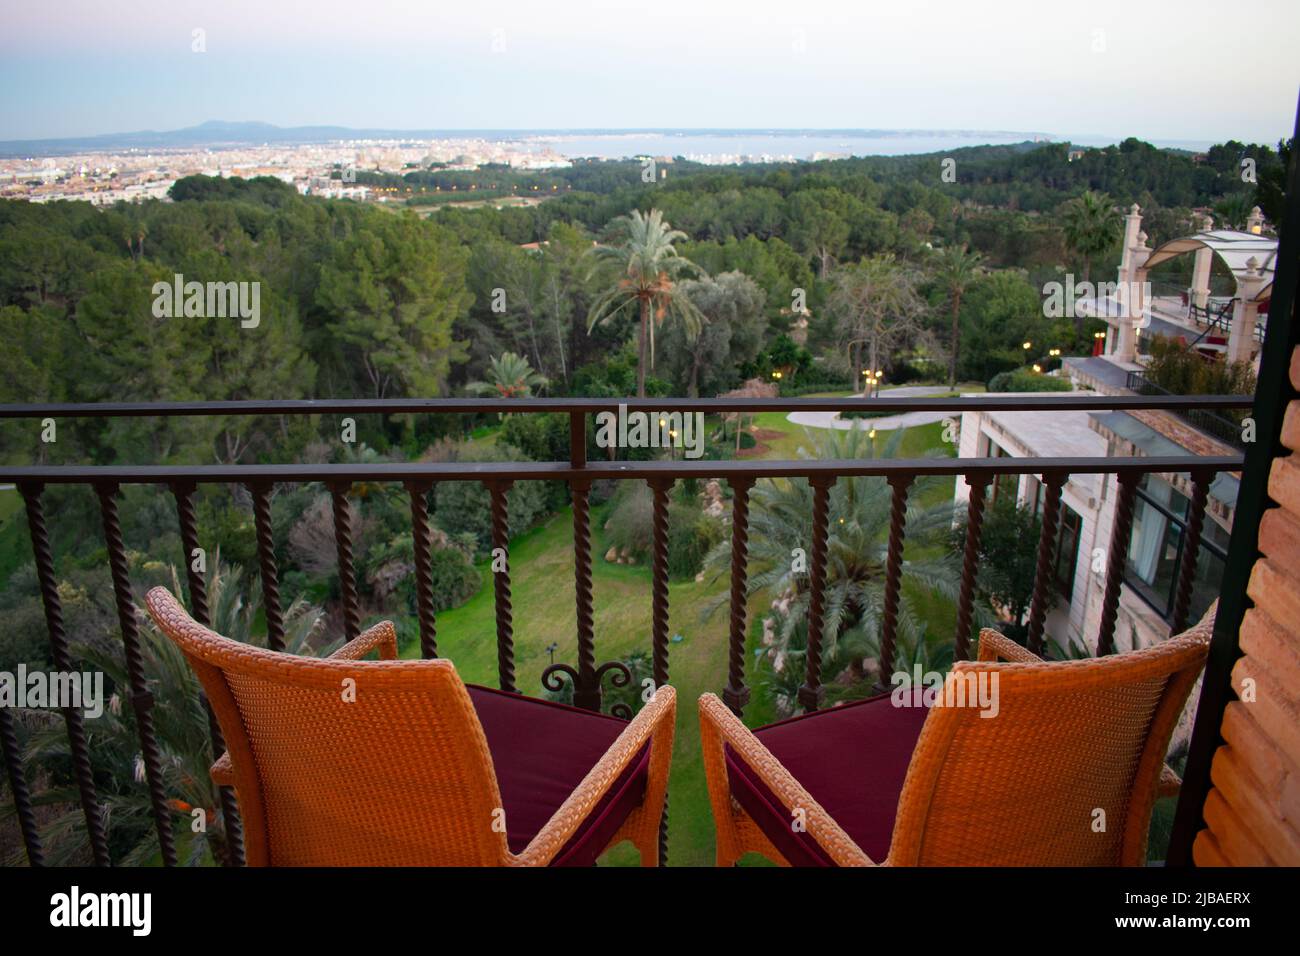 Palma de Mallorca golf resort with scenic view of harbor - European beach vacation destinations Stock Photo